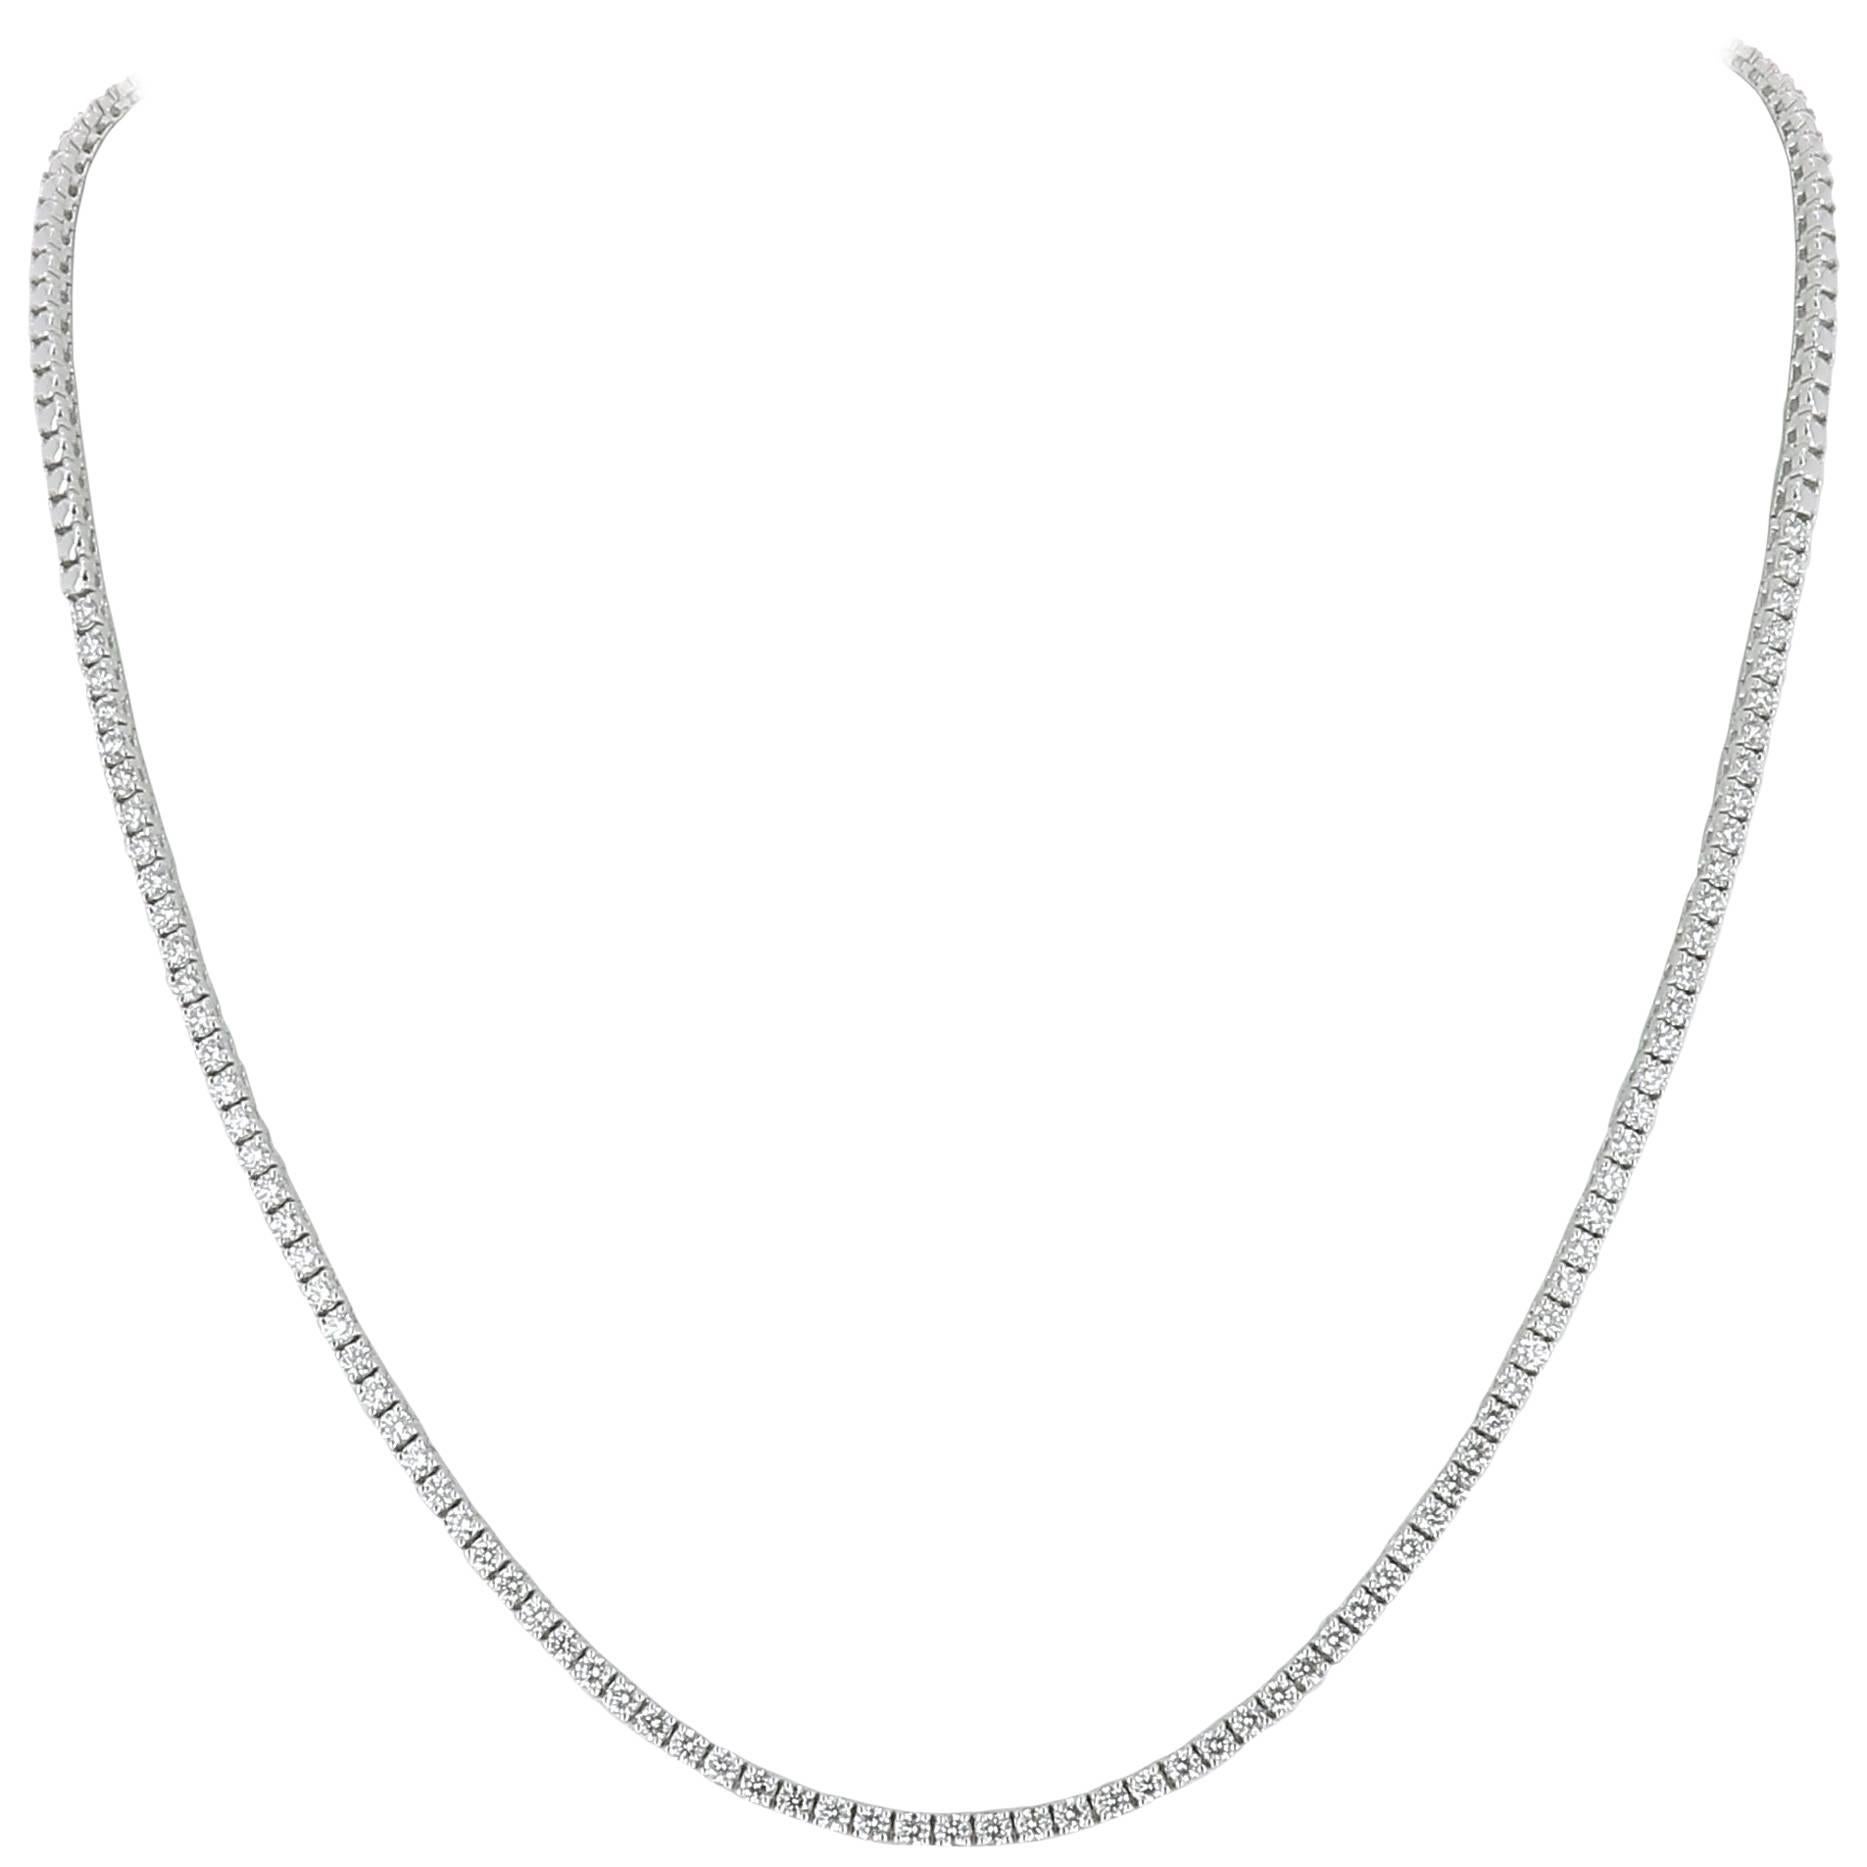  2, 65 carats GVS Diamond Riviera 18 Karat White Gold Tennis Line Necklace For Sale